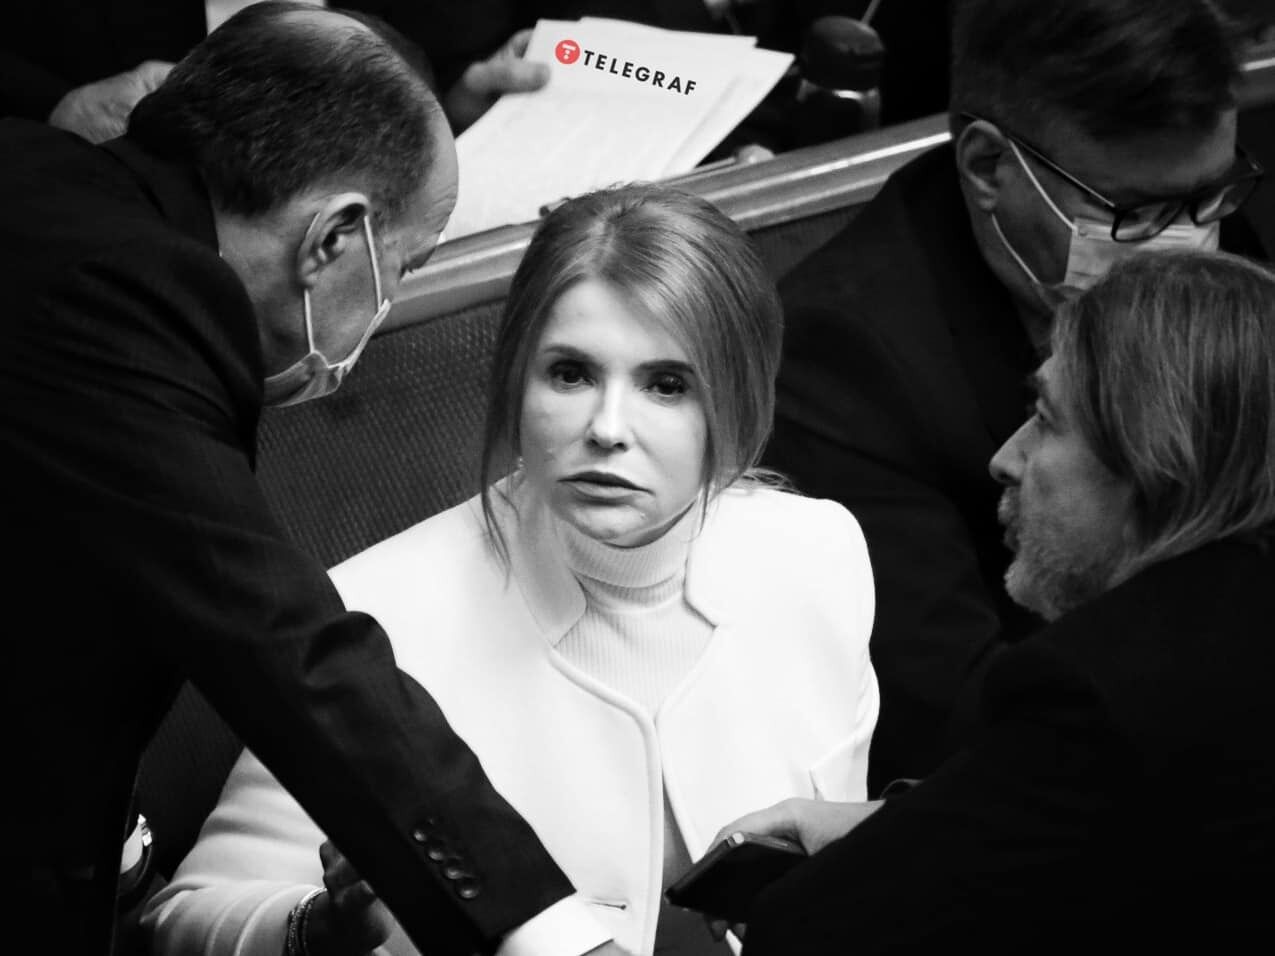 Тимошенко заметила фотографа